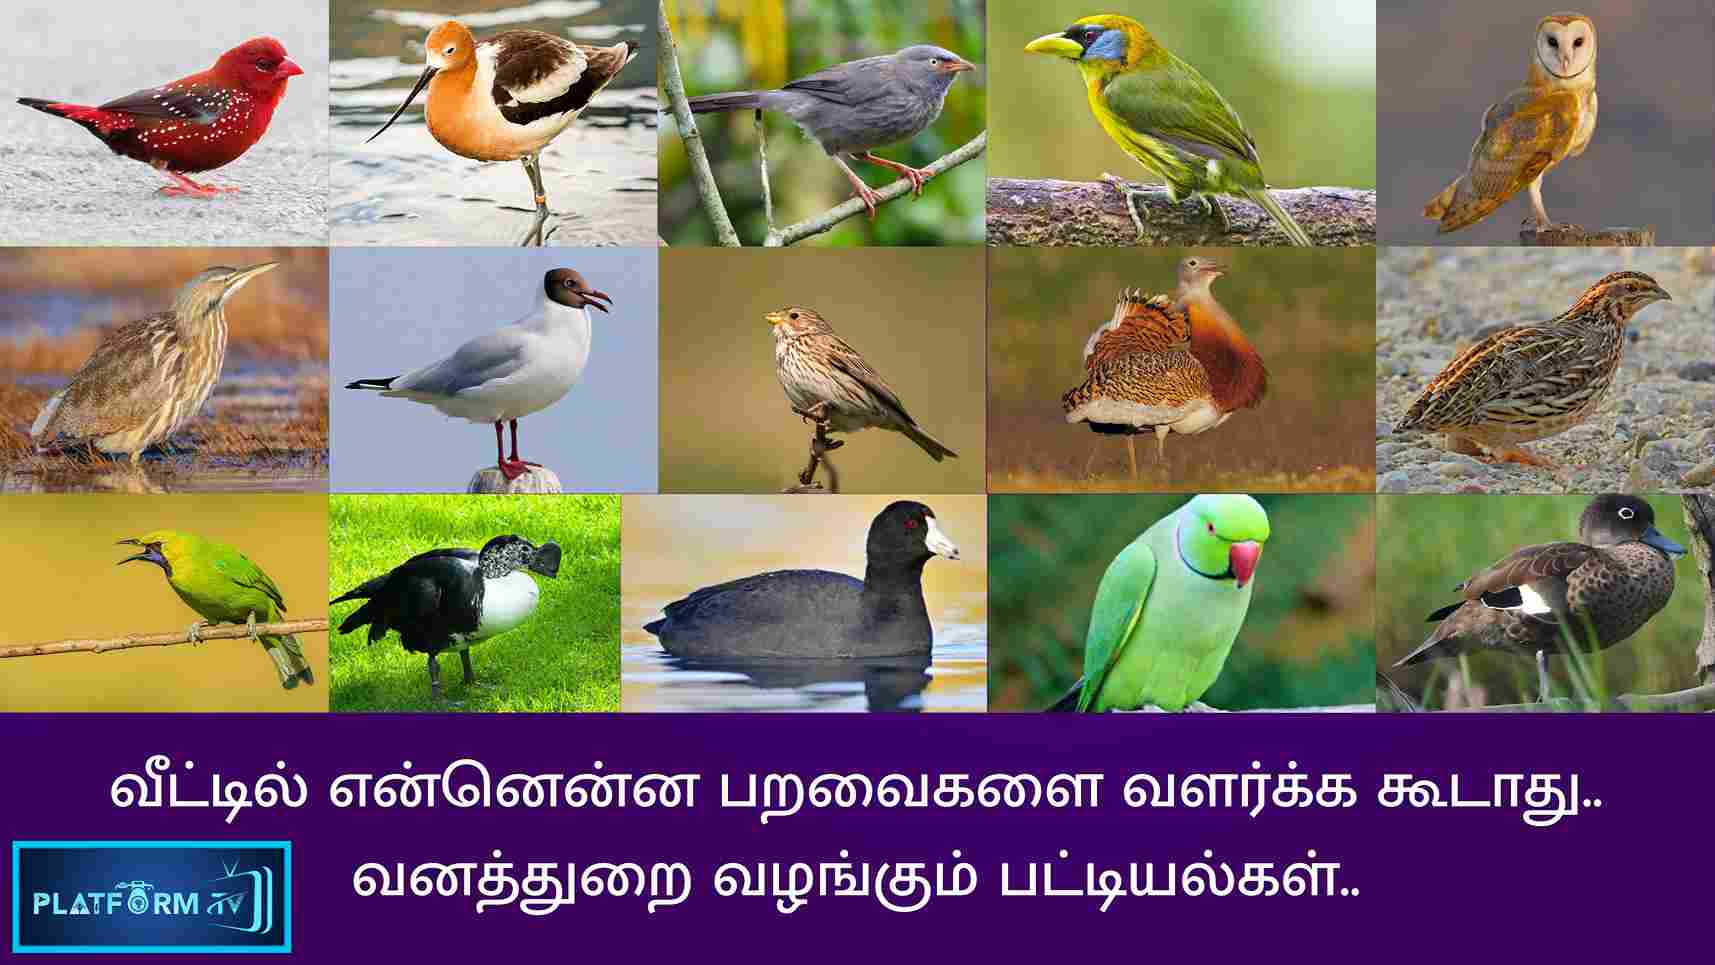 What birds should not be kept at home - Platform Tamil